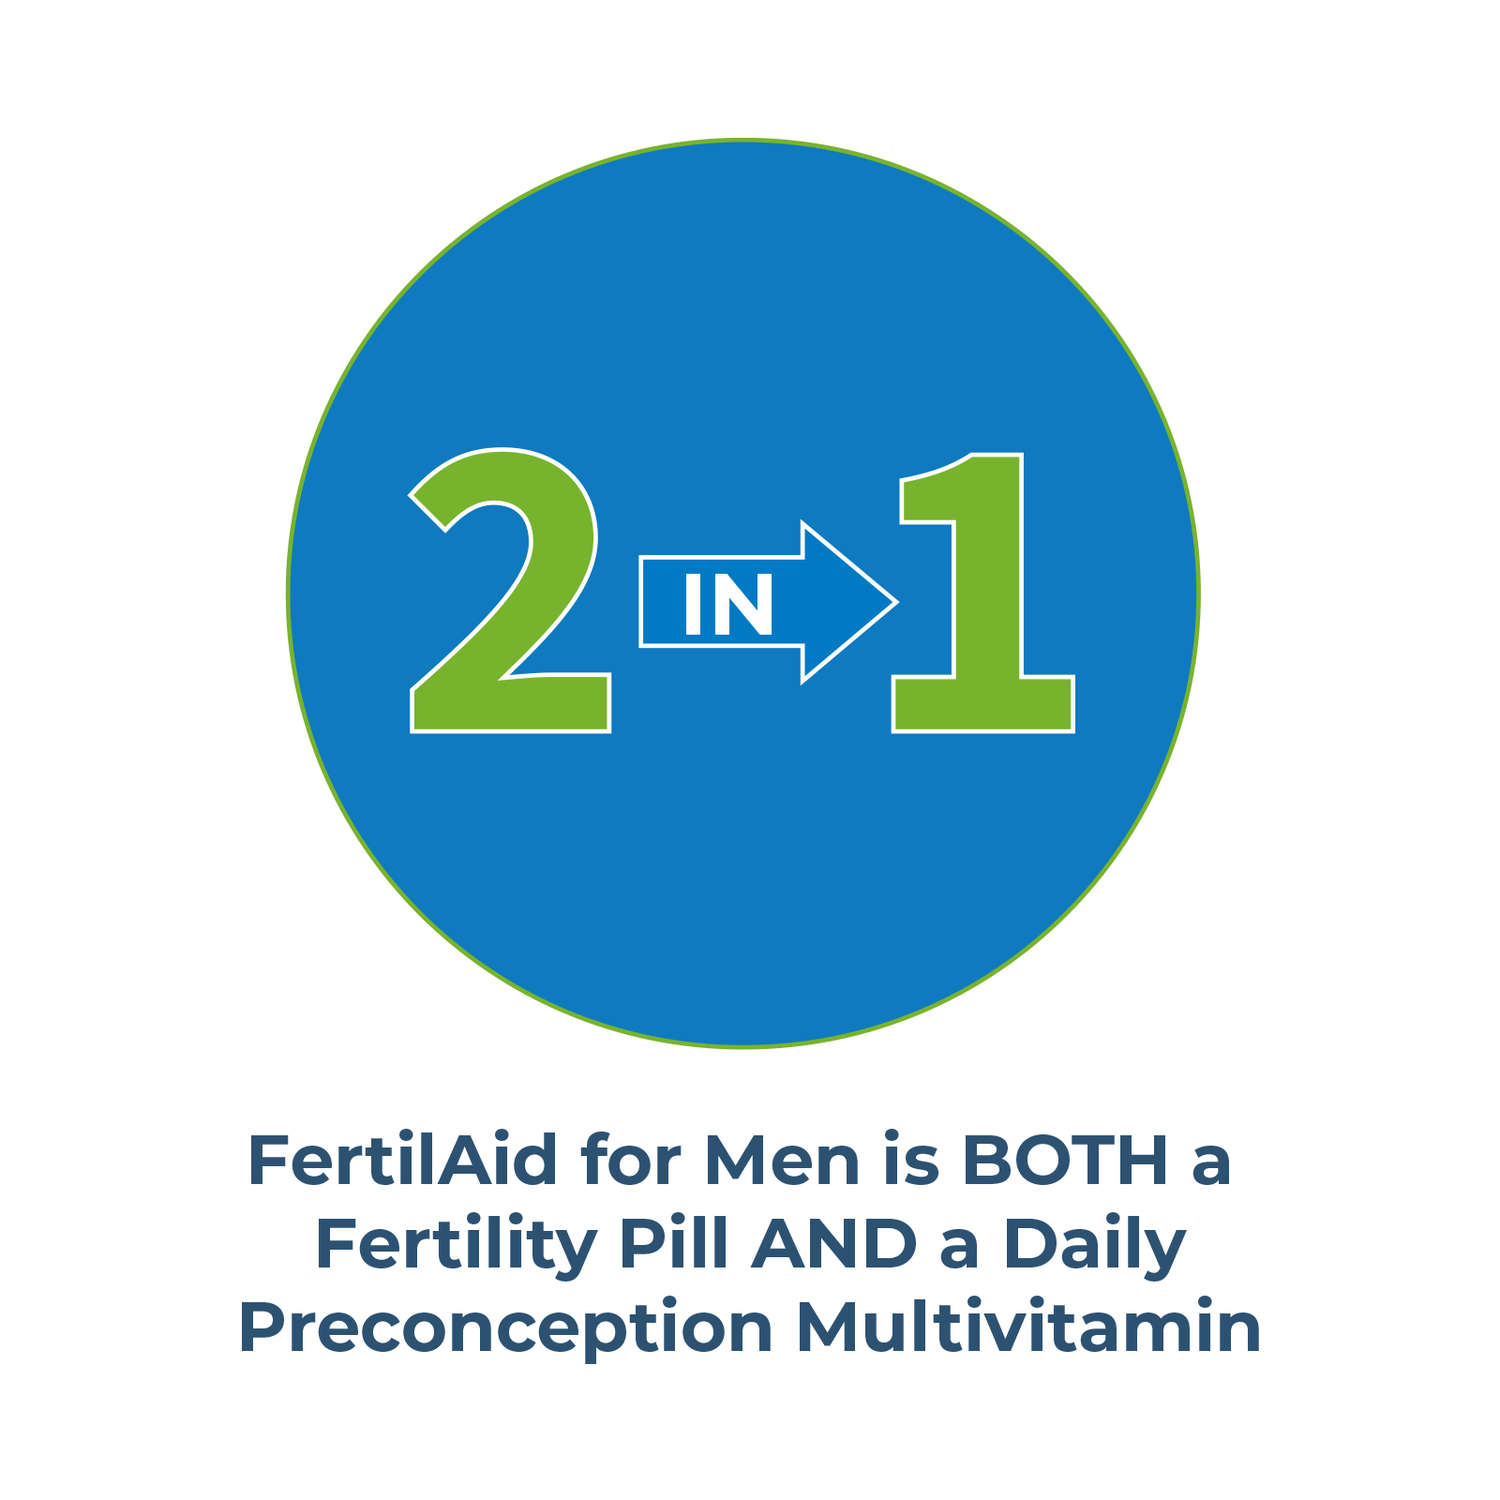 FertilAid for Men is a 2 in 1 Fertility Pill and Preconception Multivitamin